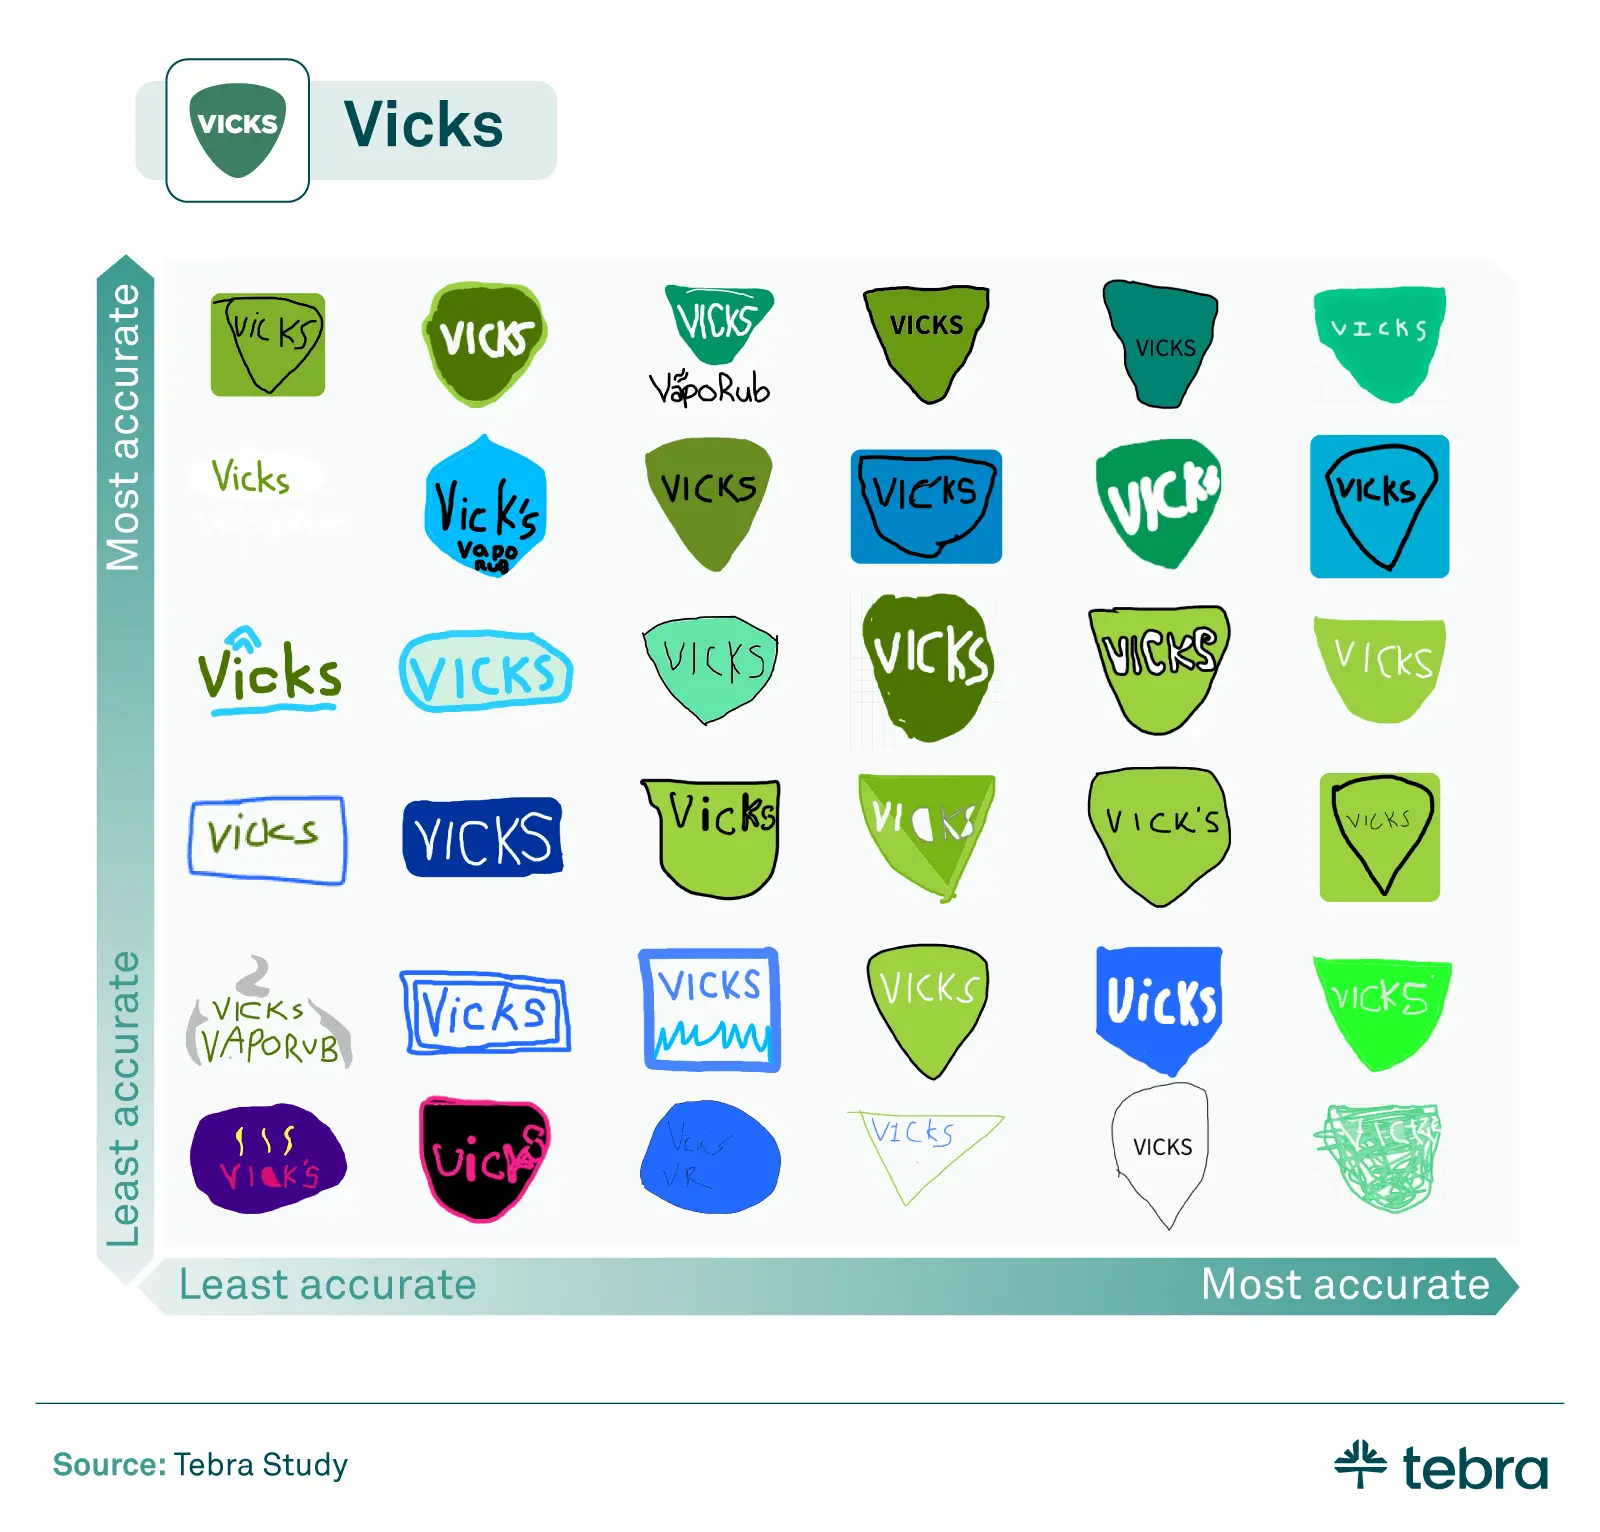 Vicks logo recall by poll respondents